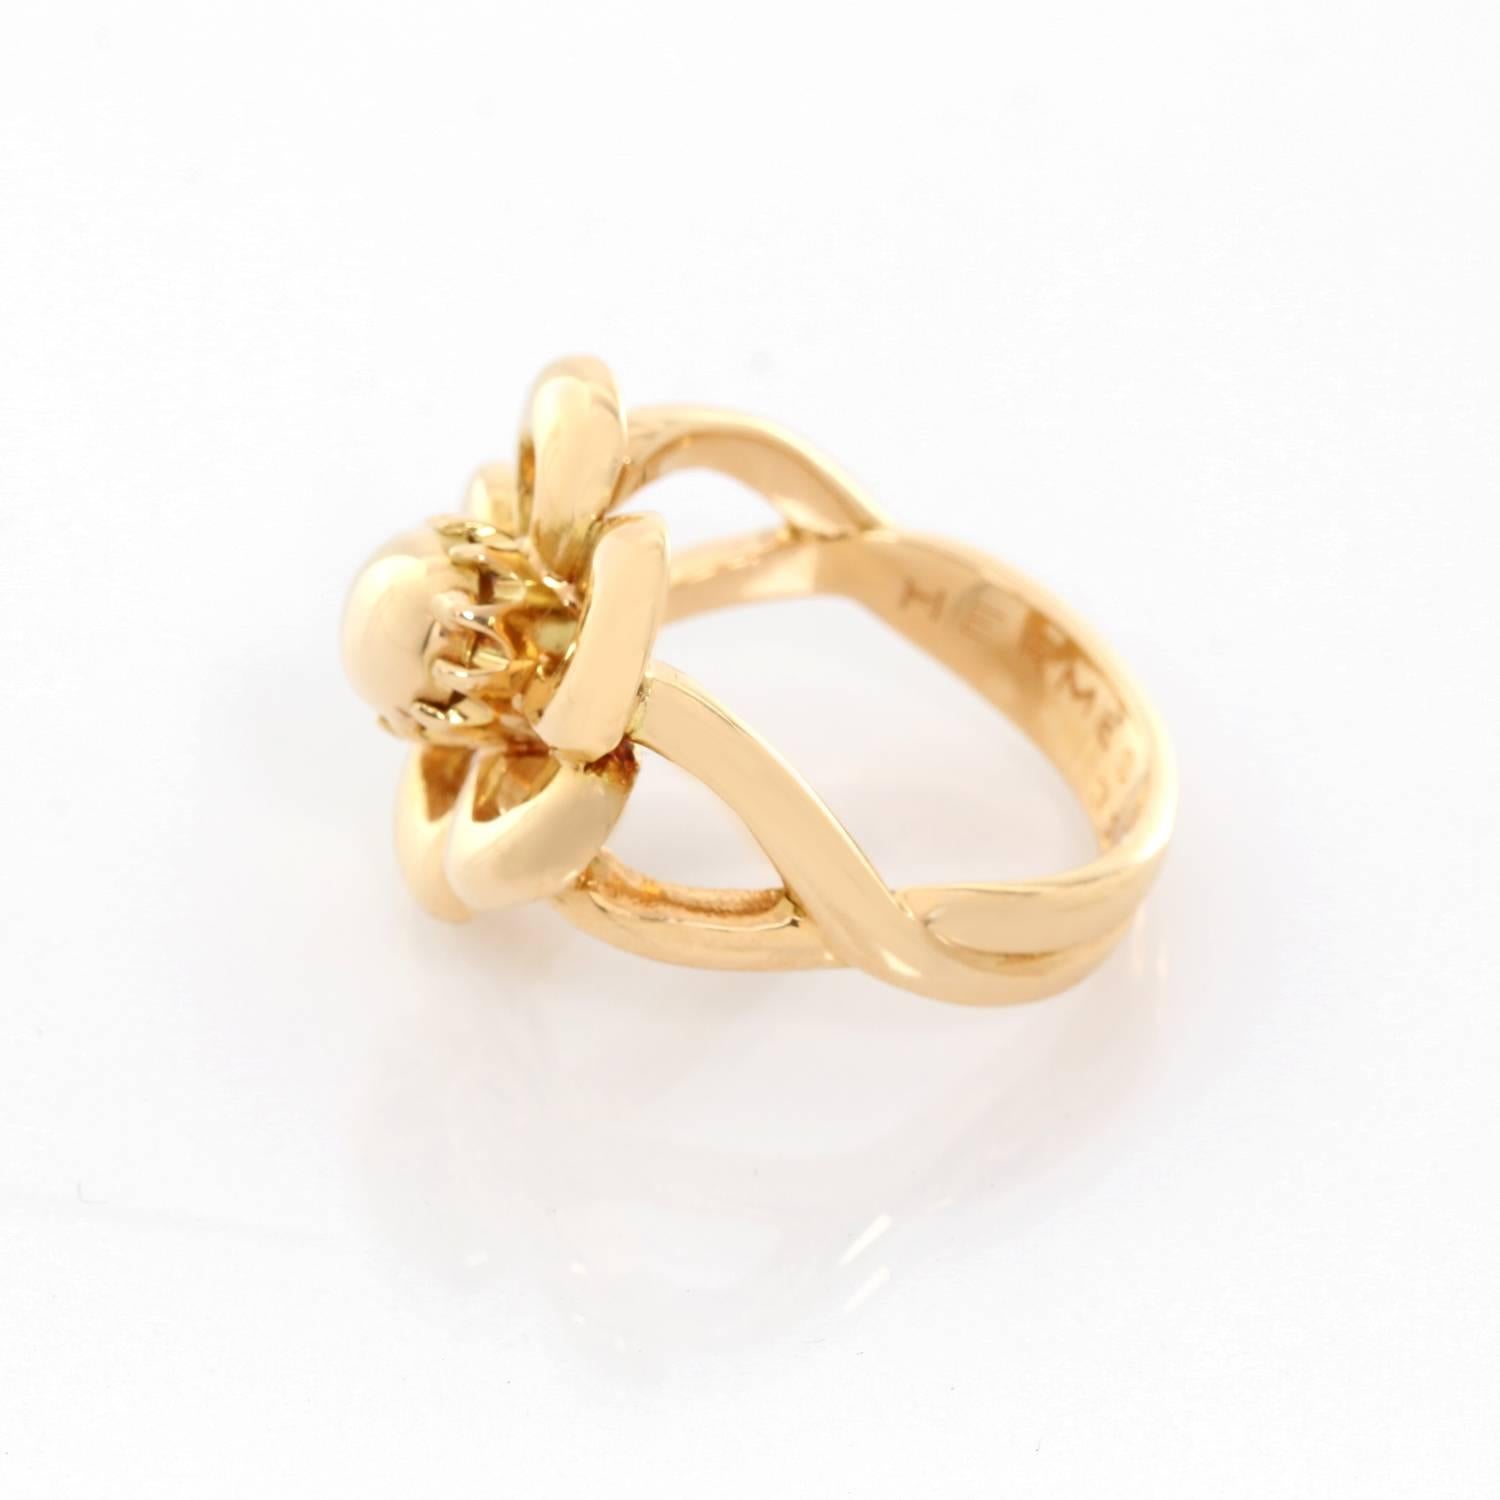 flower shaped gold ring design